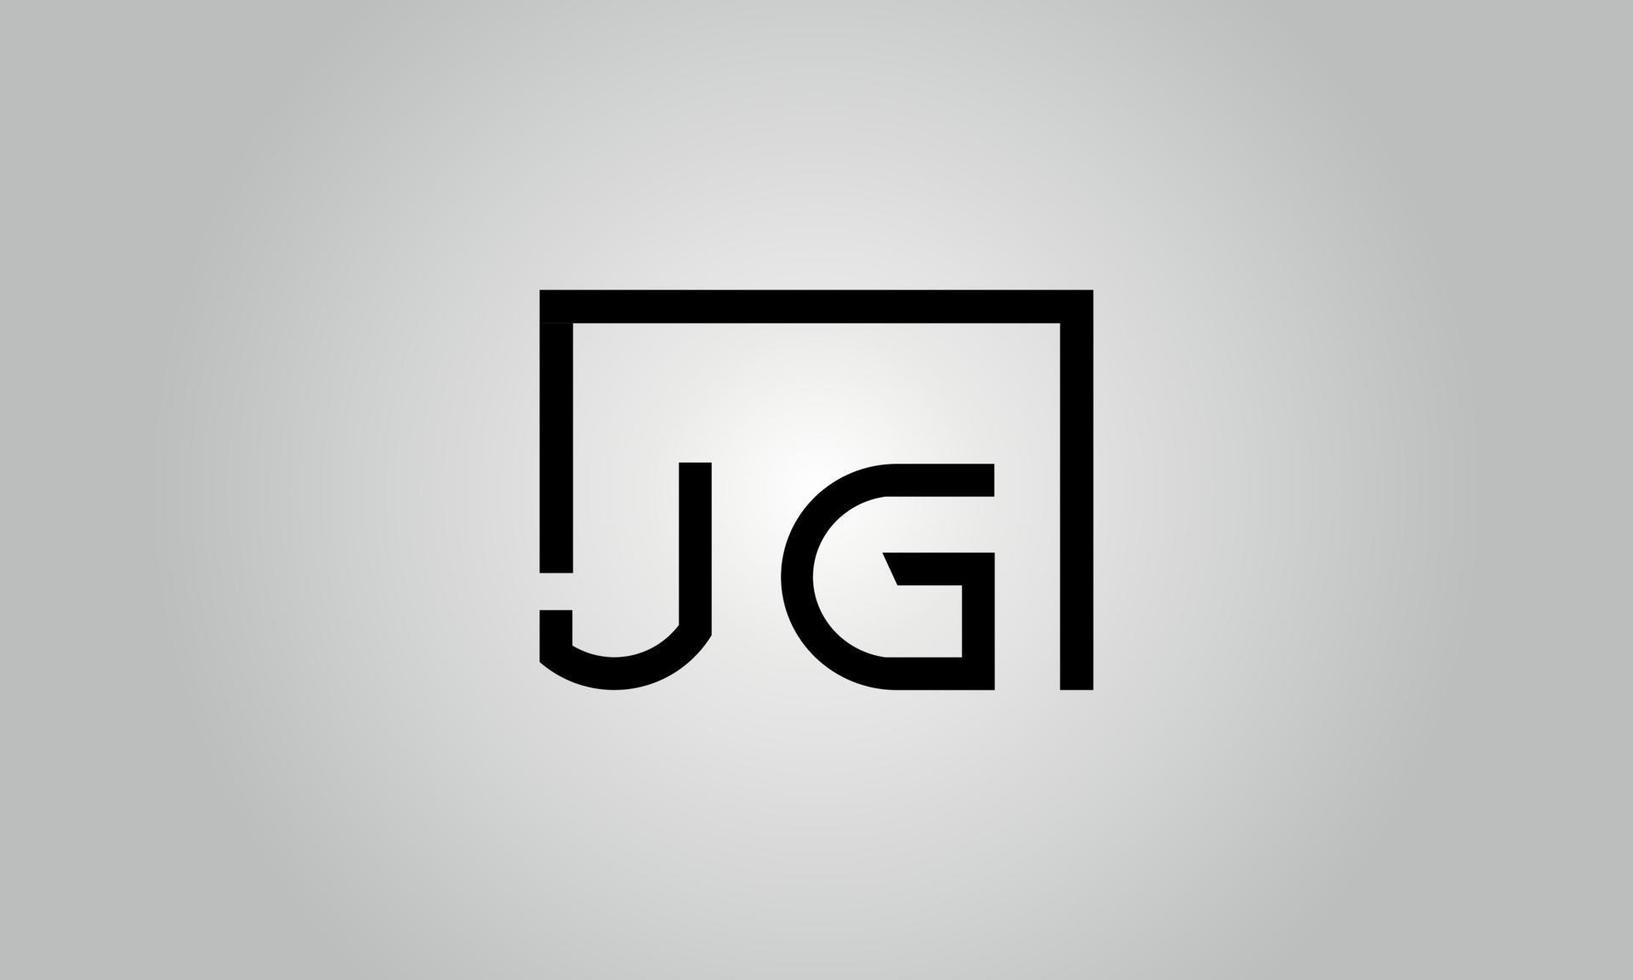 Letter JG logo design. JG logo with square shape in black colors vector free vector template.